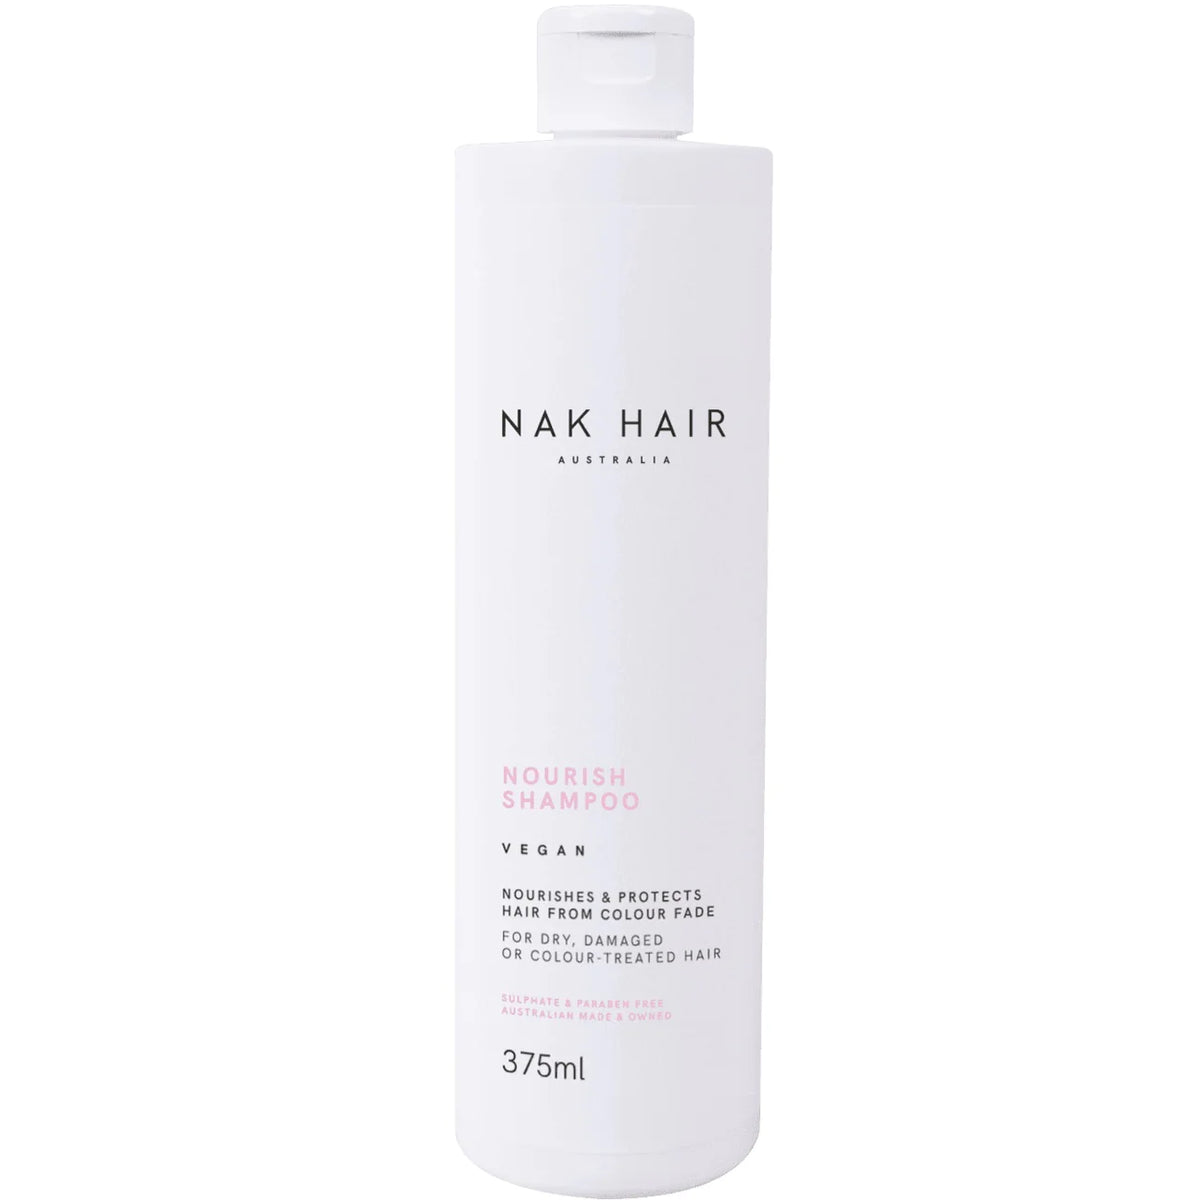 NAK hair | Nourish shampoo - droog, beschadigd of gekleurd haar